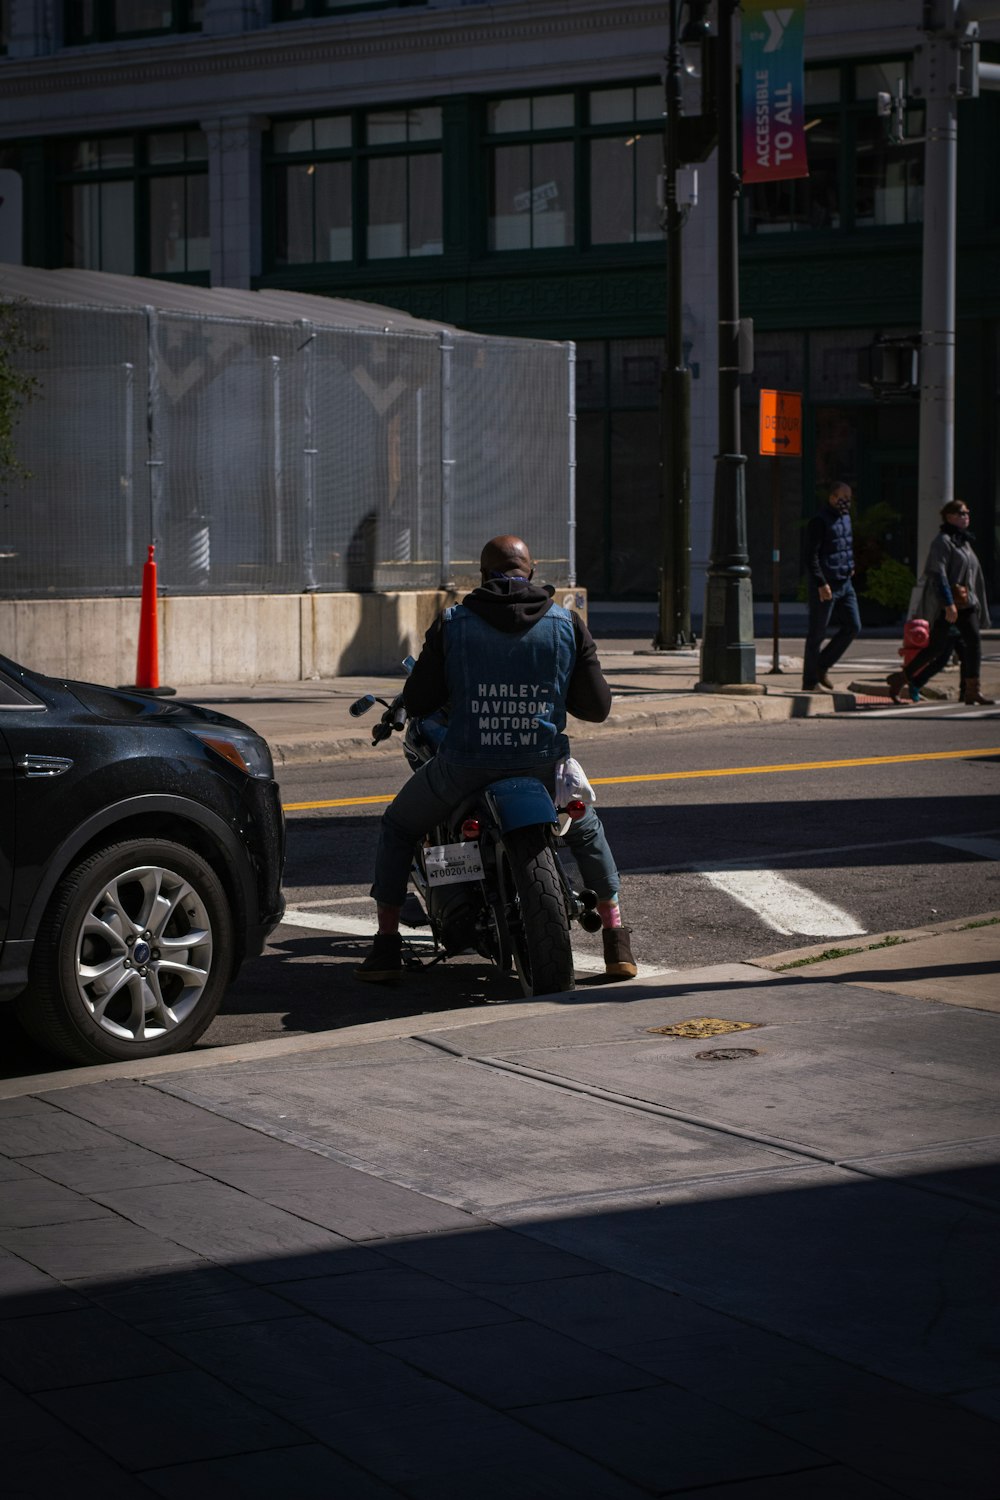 man in black jacket riding black motorcycle on road during daytime